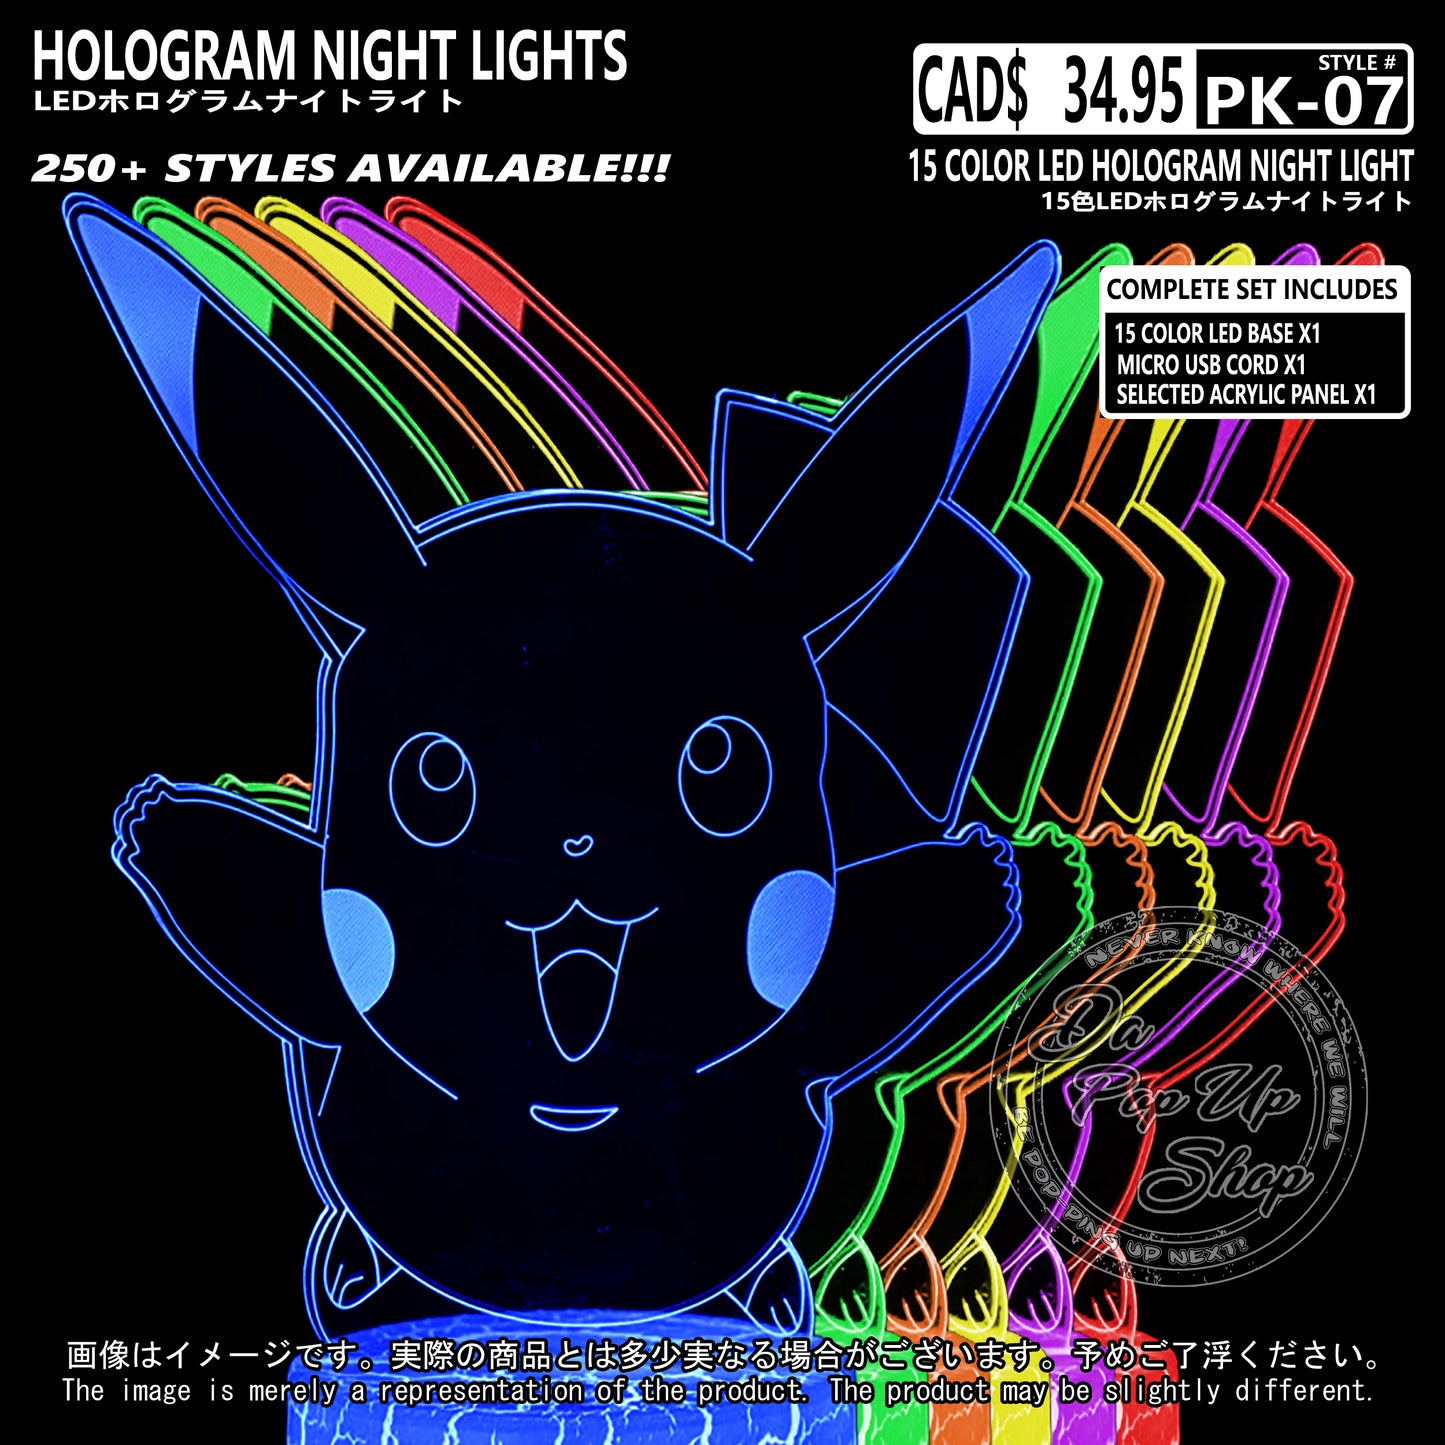 (PKM-07) PIKACHU Pokemon Hologram LED Night Light